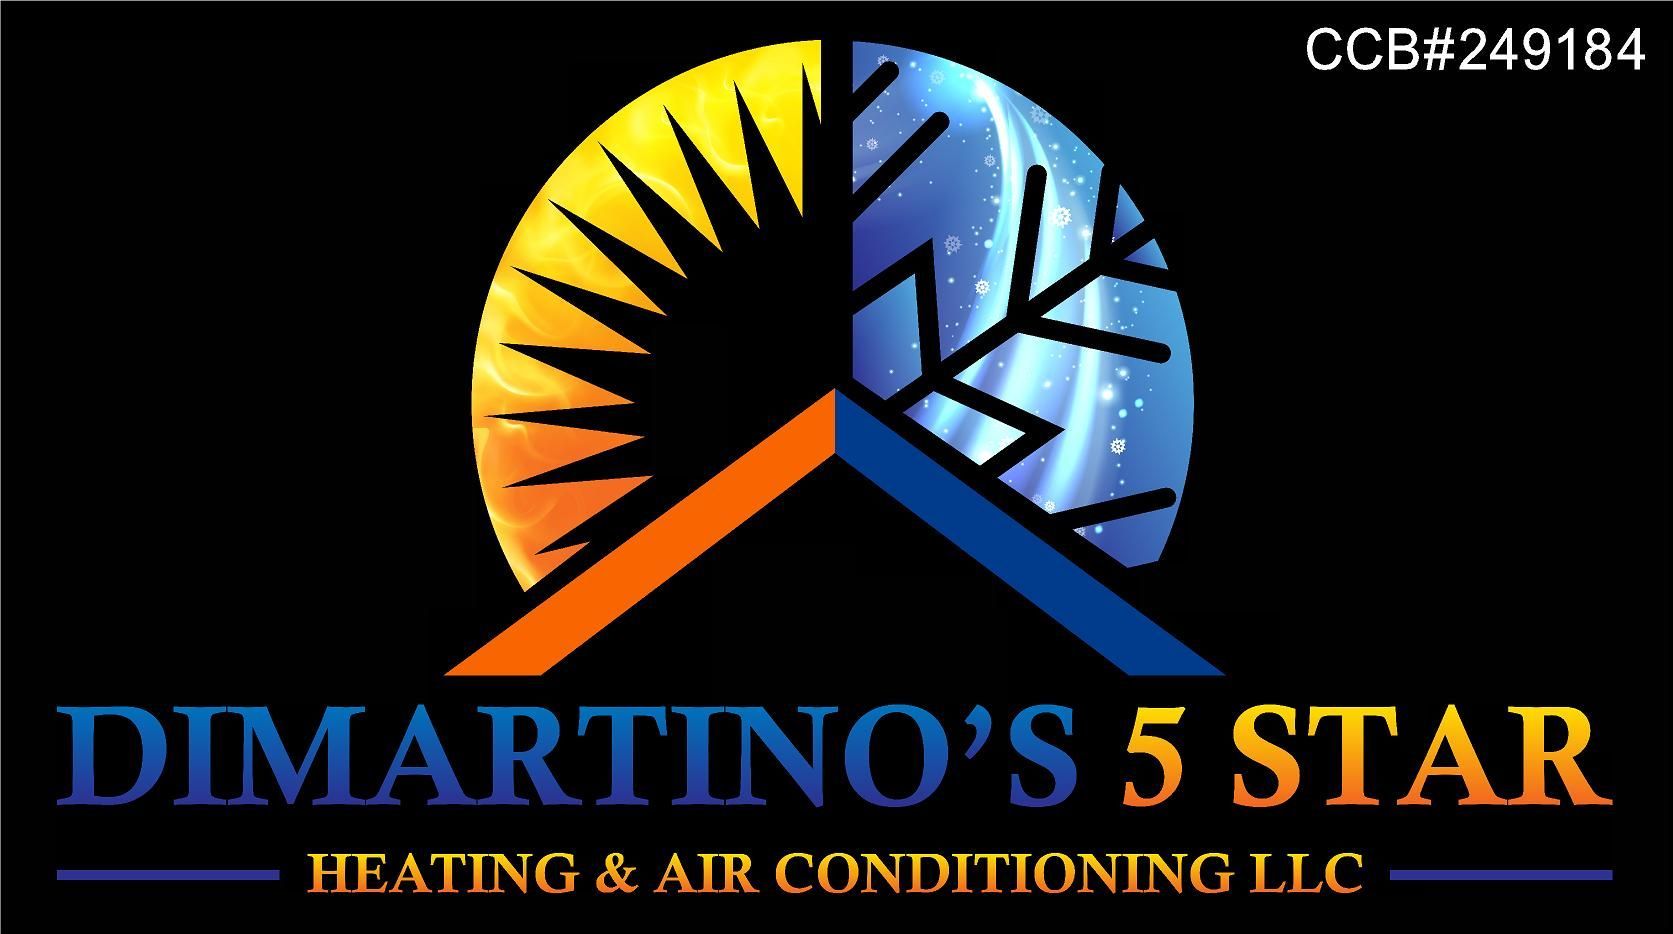 DiMartino’s 5 Star Heating & Air Conditioning LLC